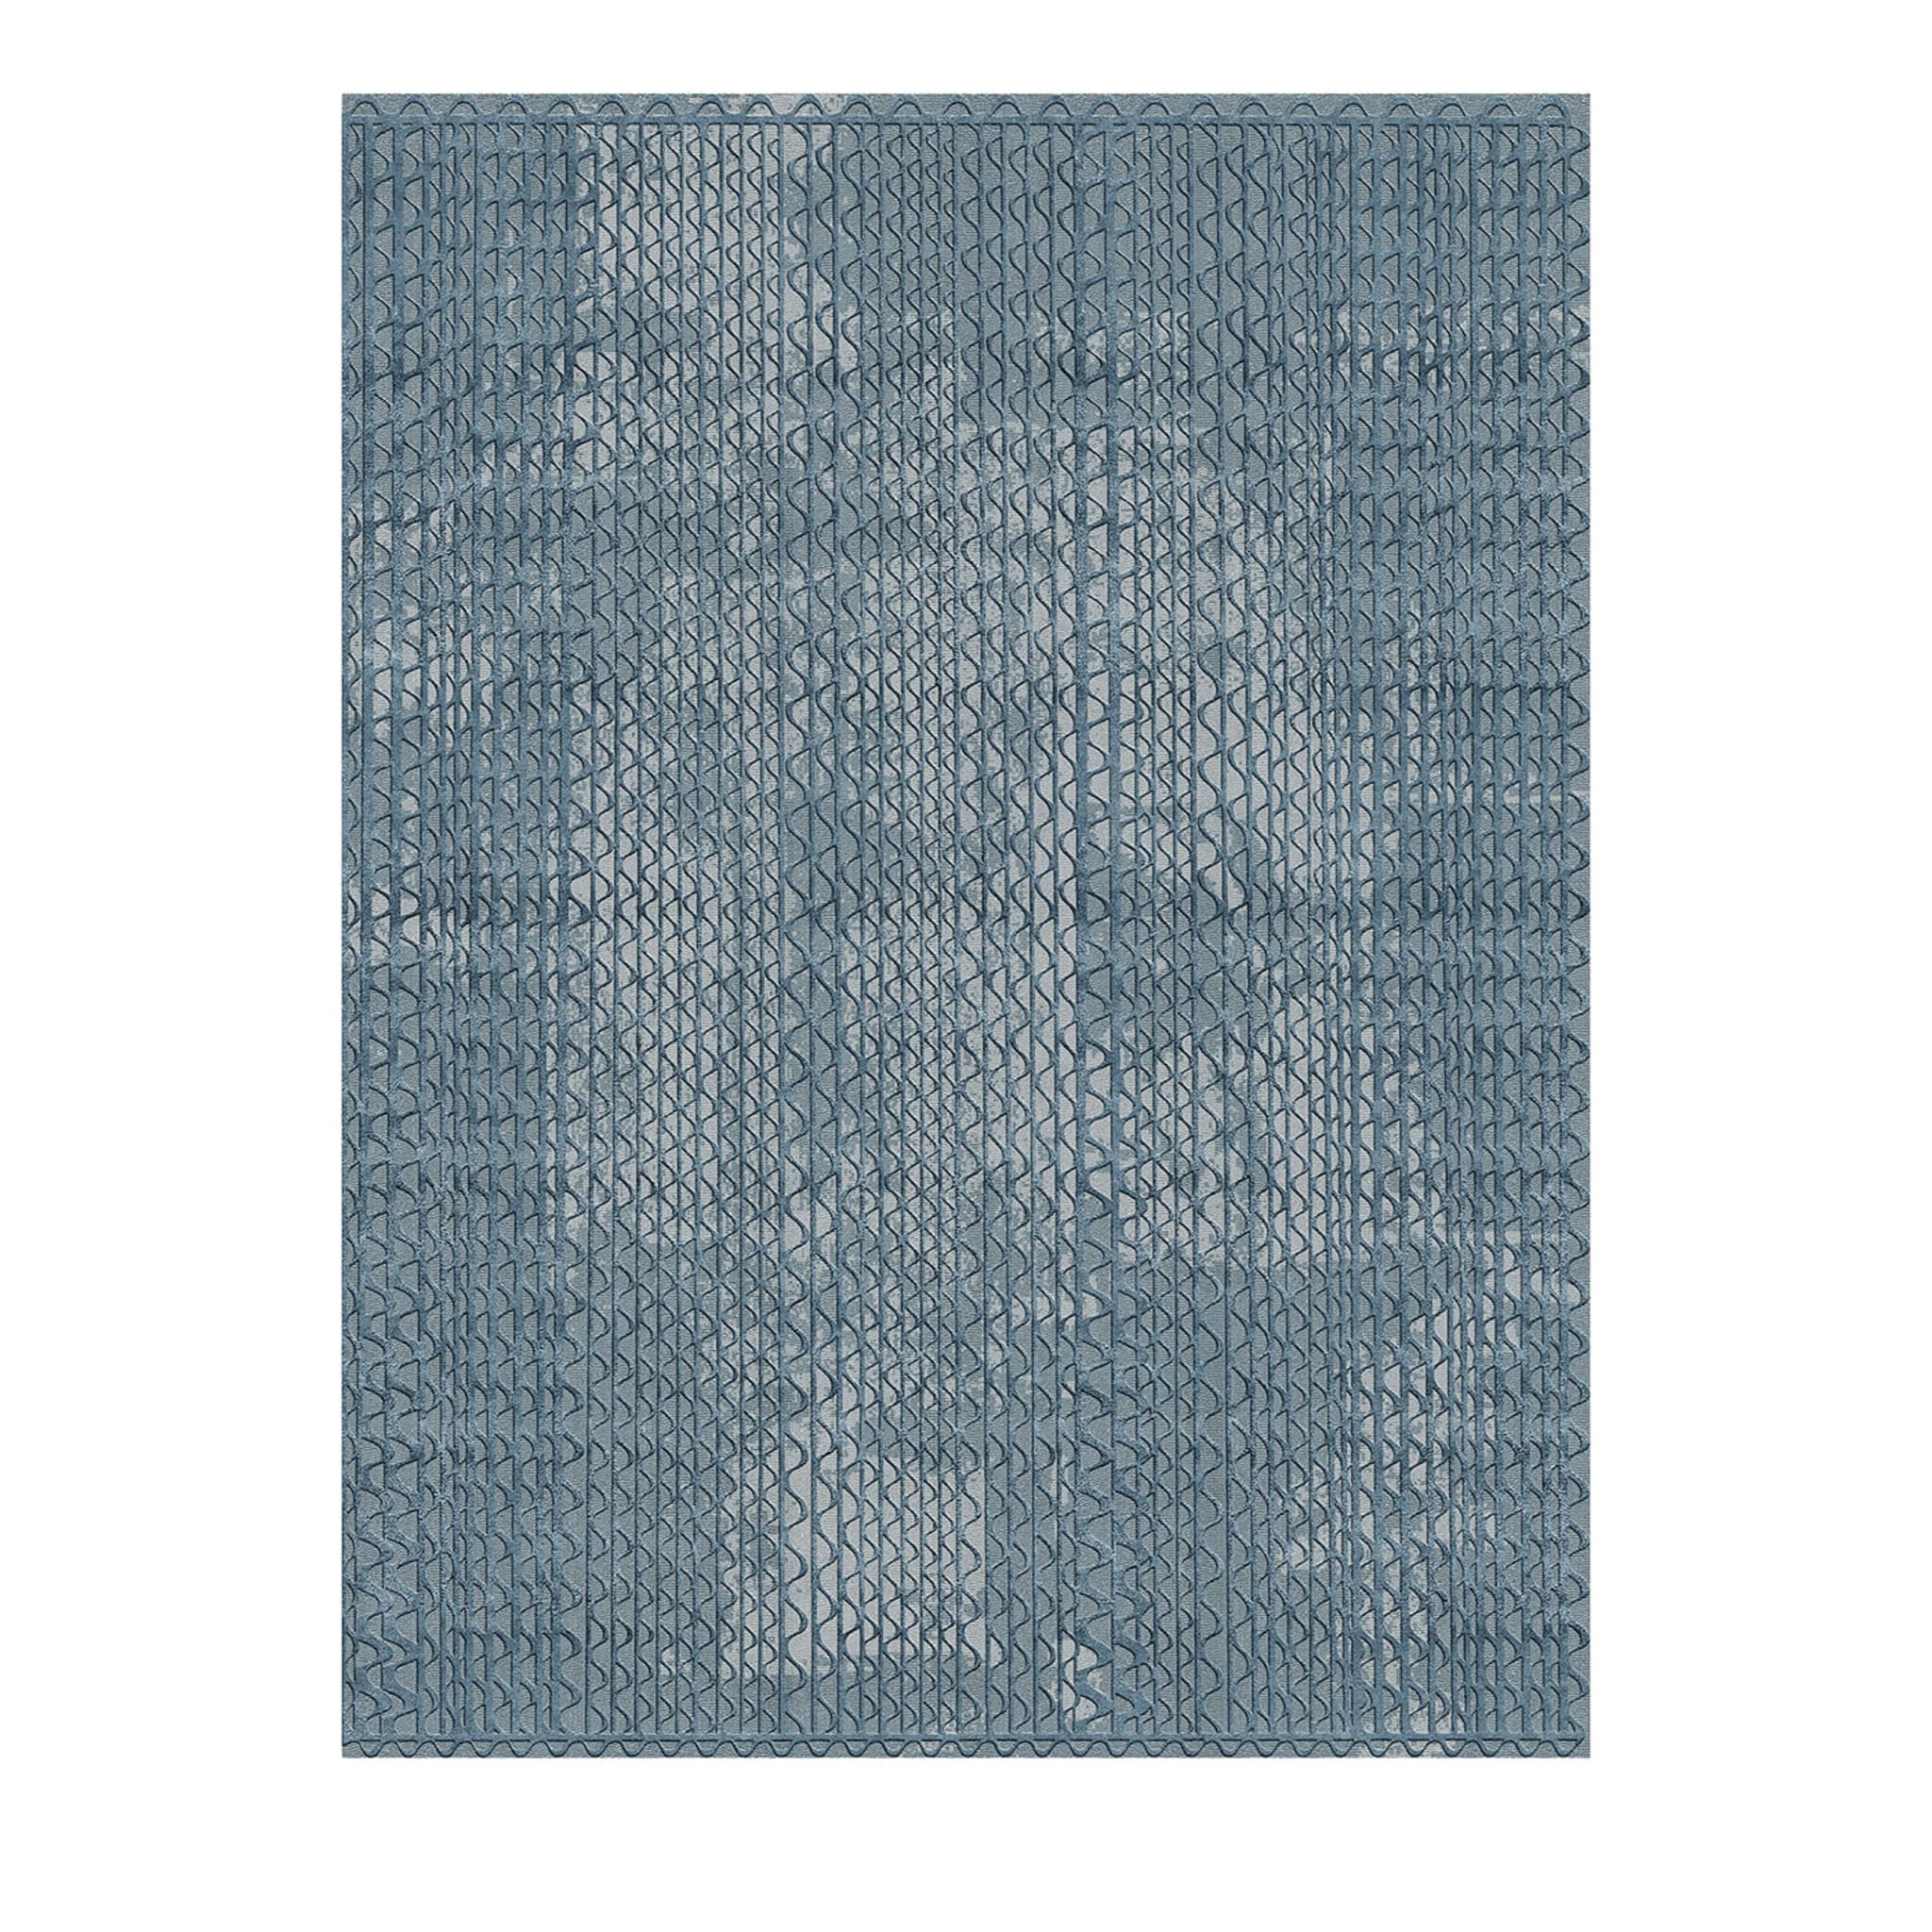 Triple Waves Rectangular Blue Rug by Lorenza Bozzoli  - Main view